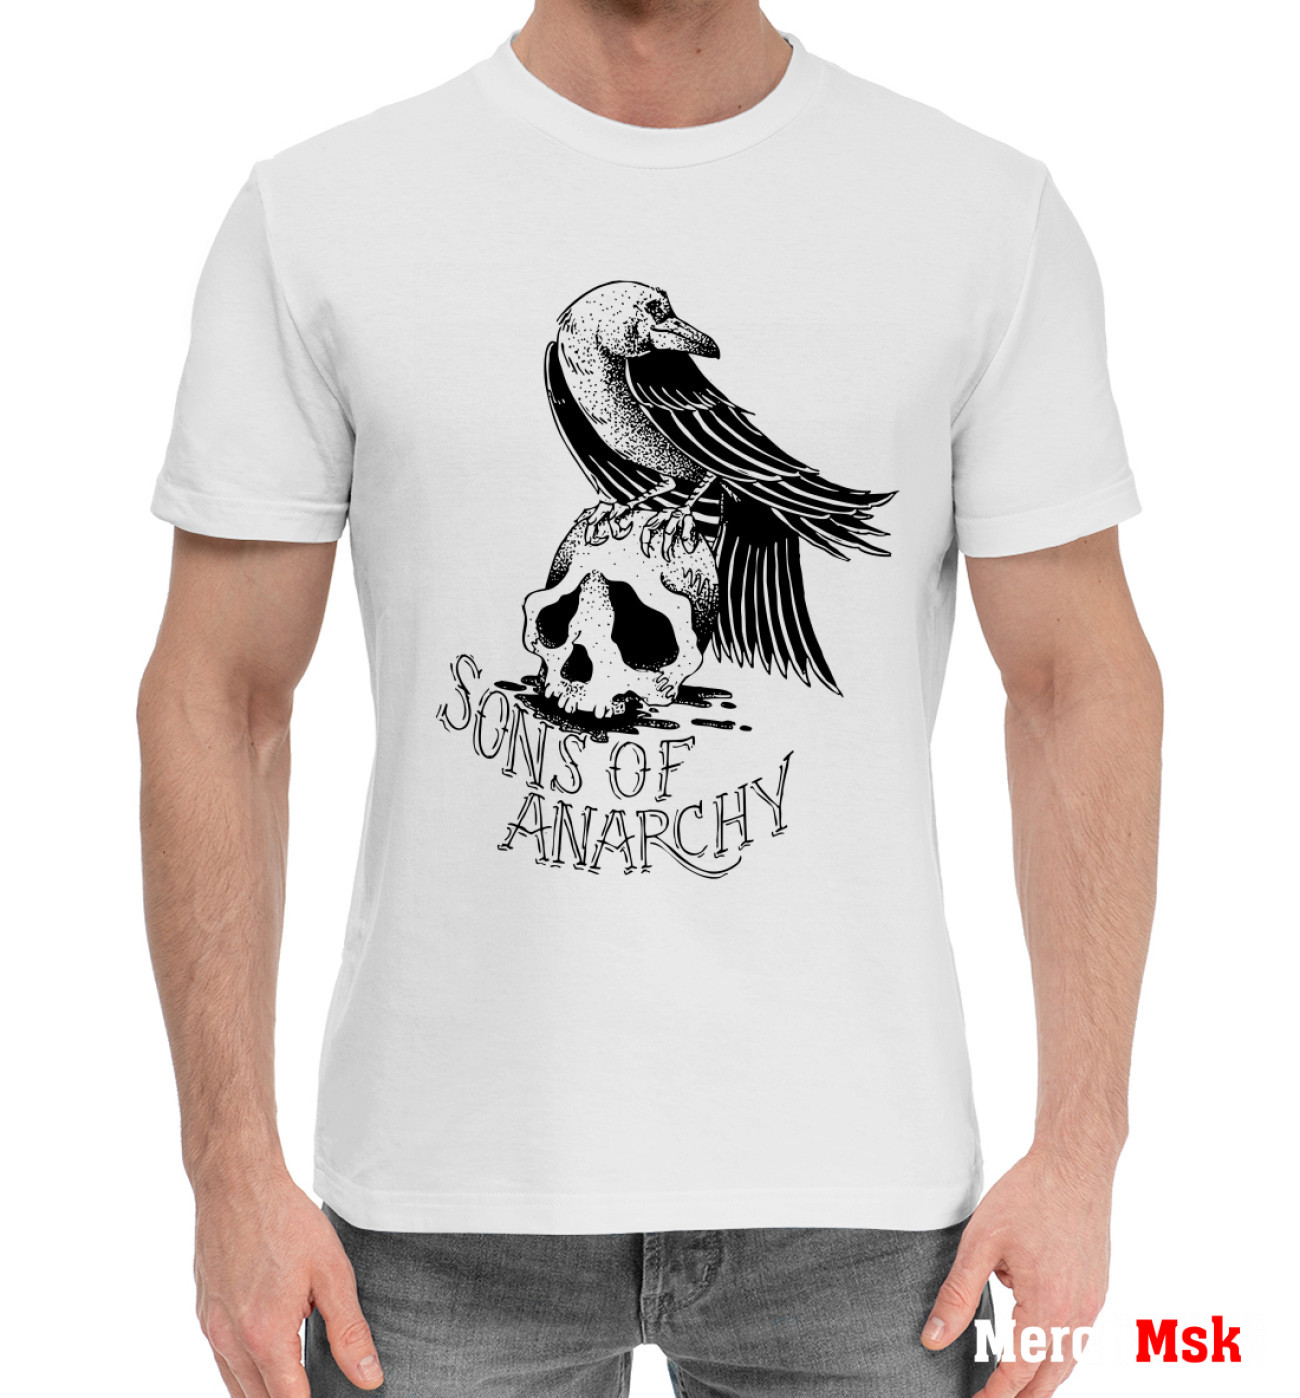 Мужская Хлопковая футболка Sons of Anarchy, артикул: SOA-856662-hfu-2